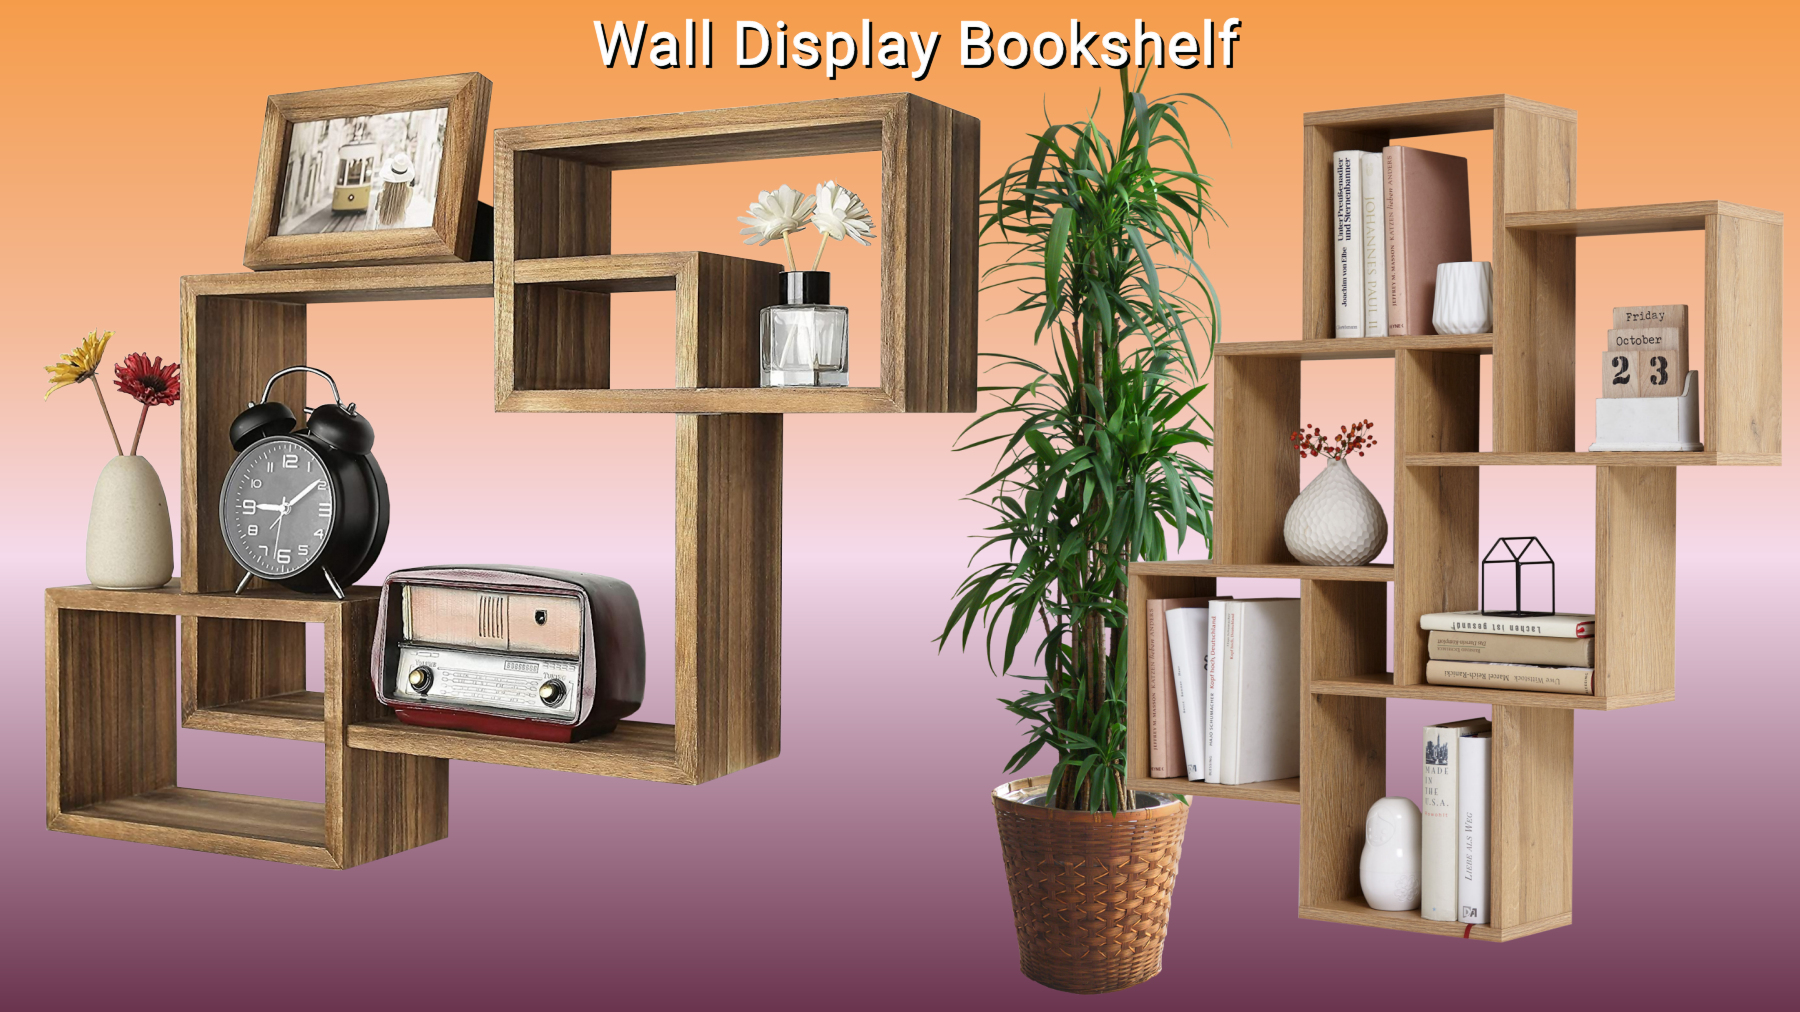 Wall Display Bookshelf